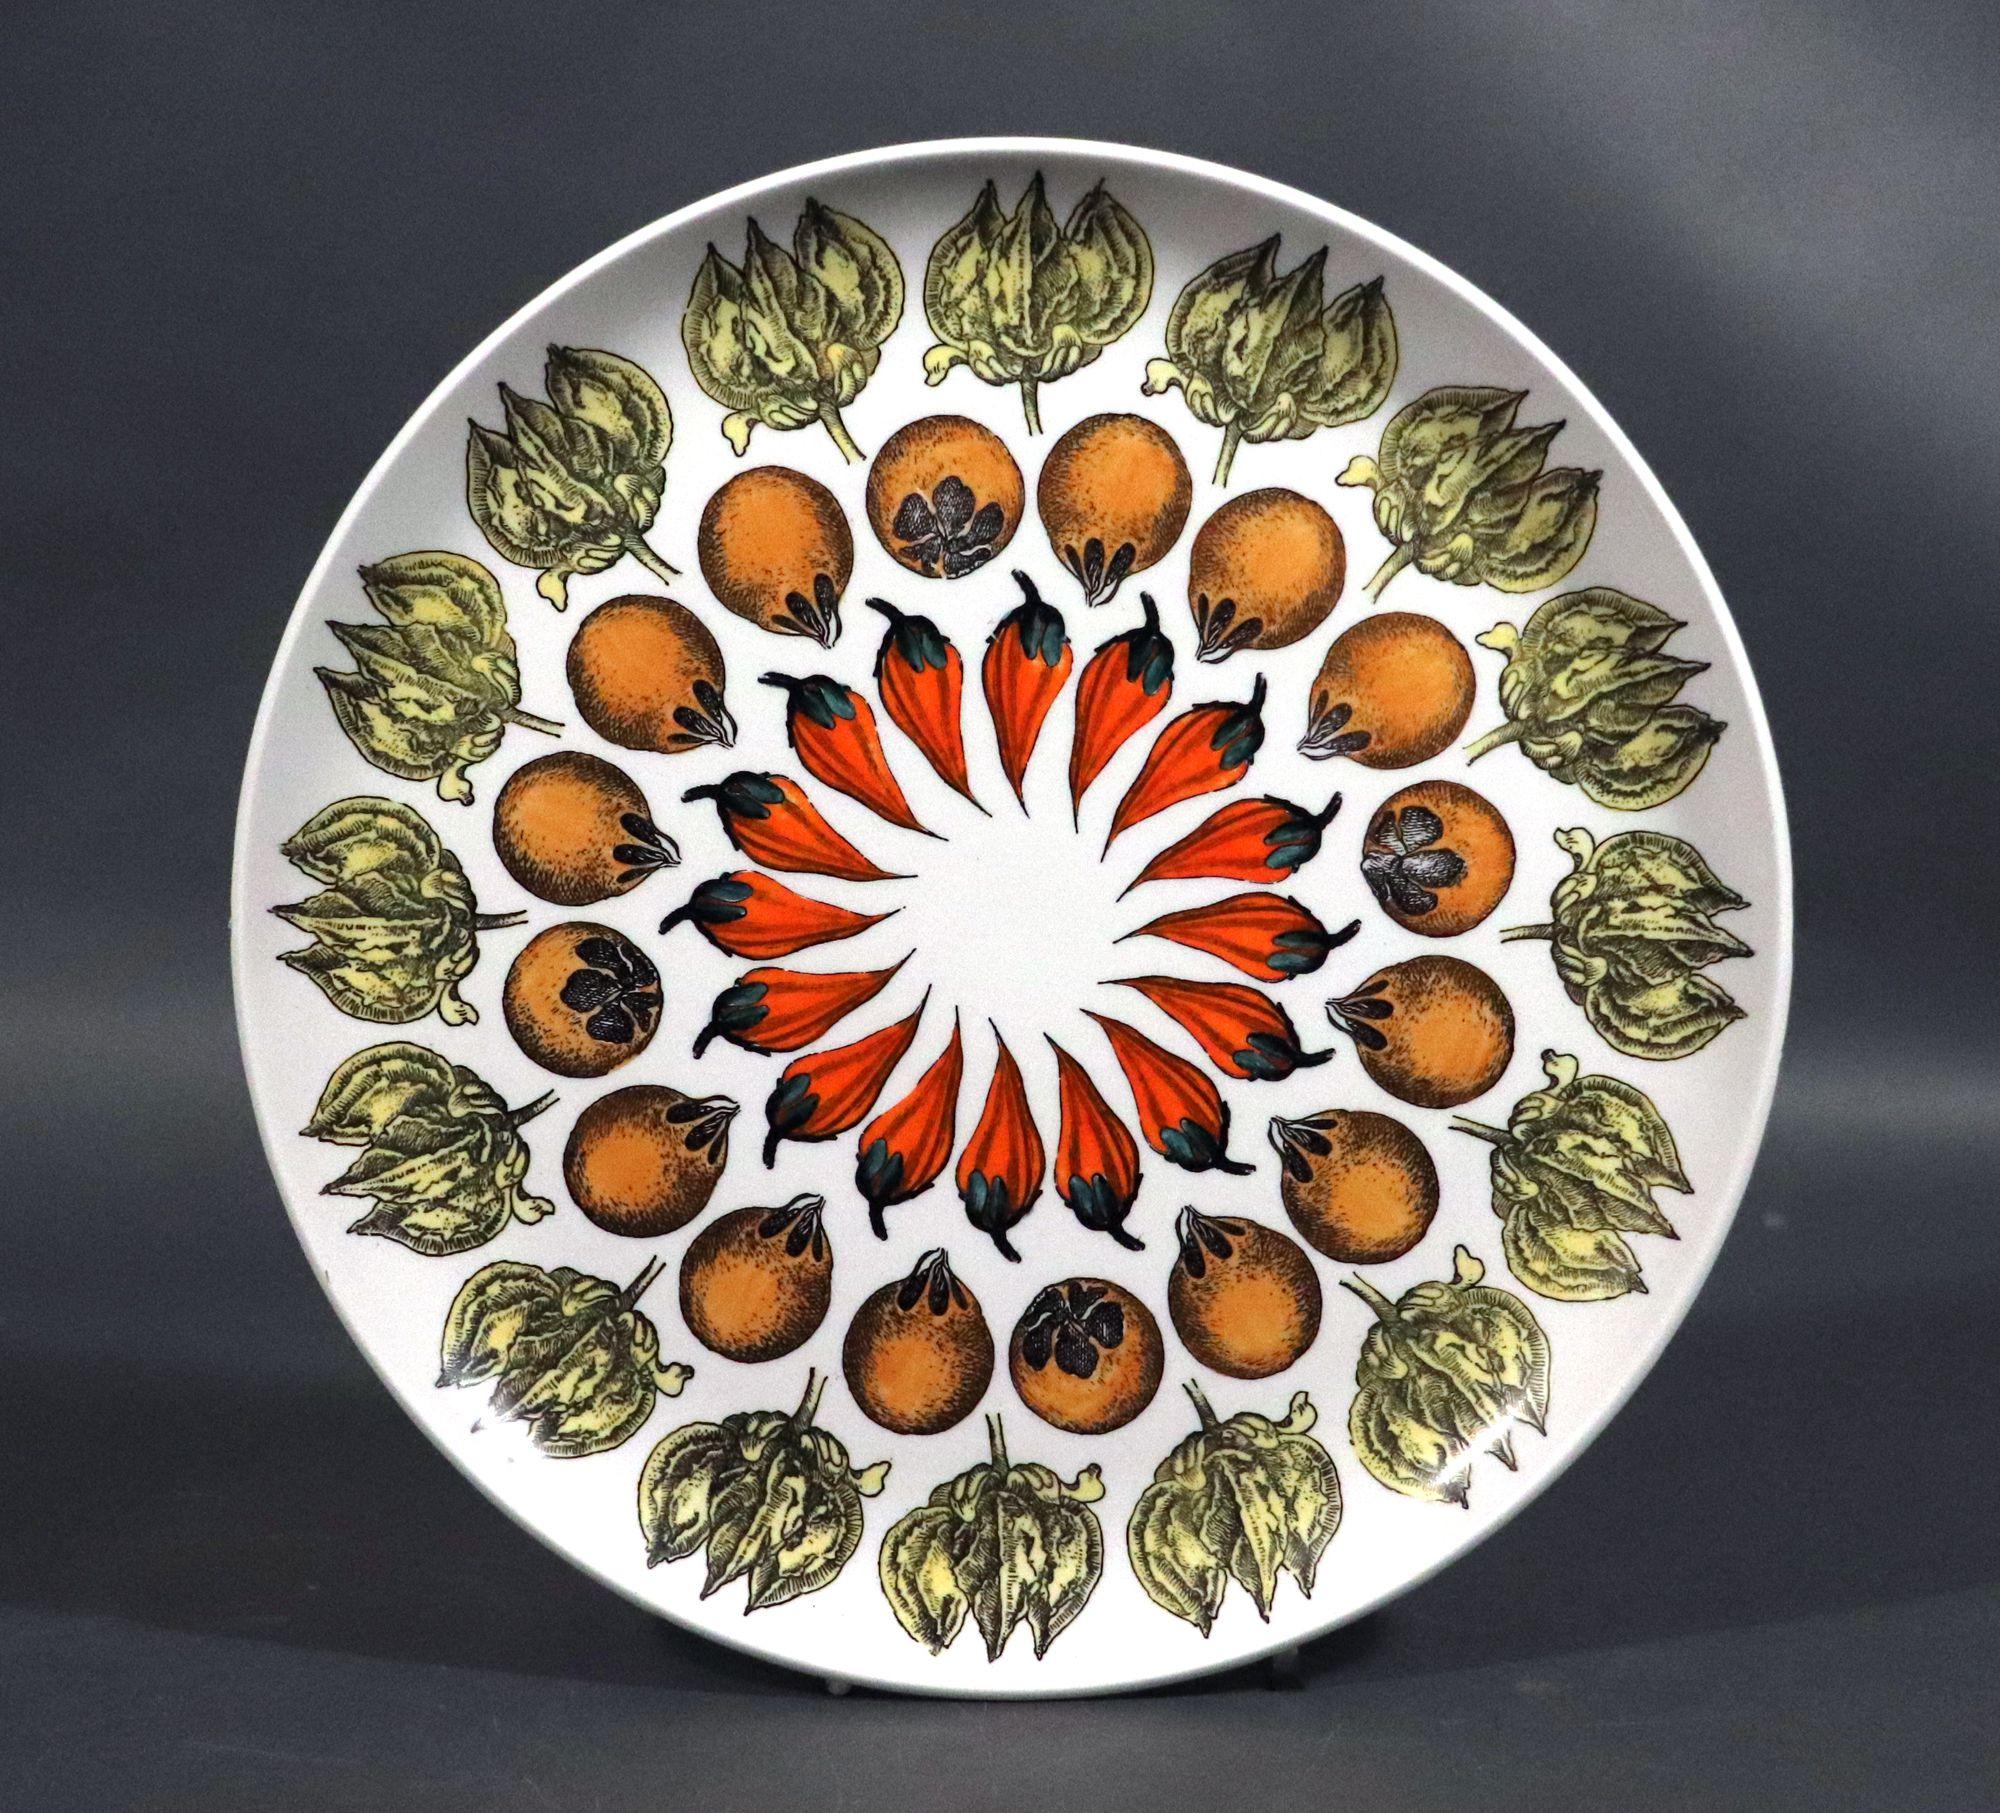 Piero Fornasetti Porcelain Plates, Giostra di Frutta (Merry-go-Round of Fruit) For Sale 10